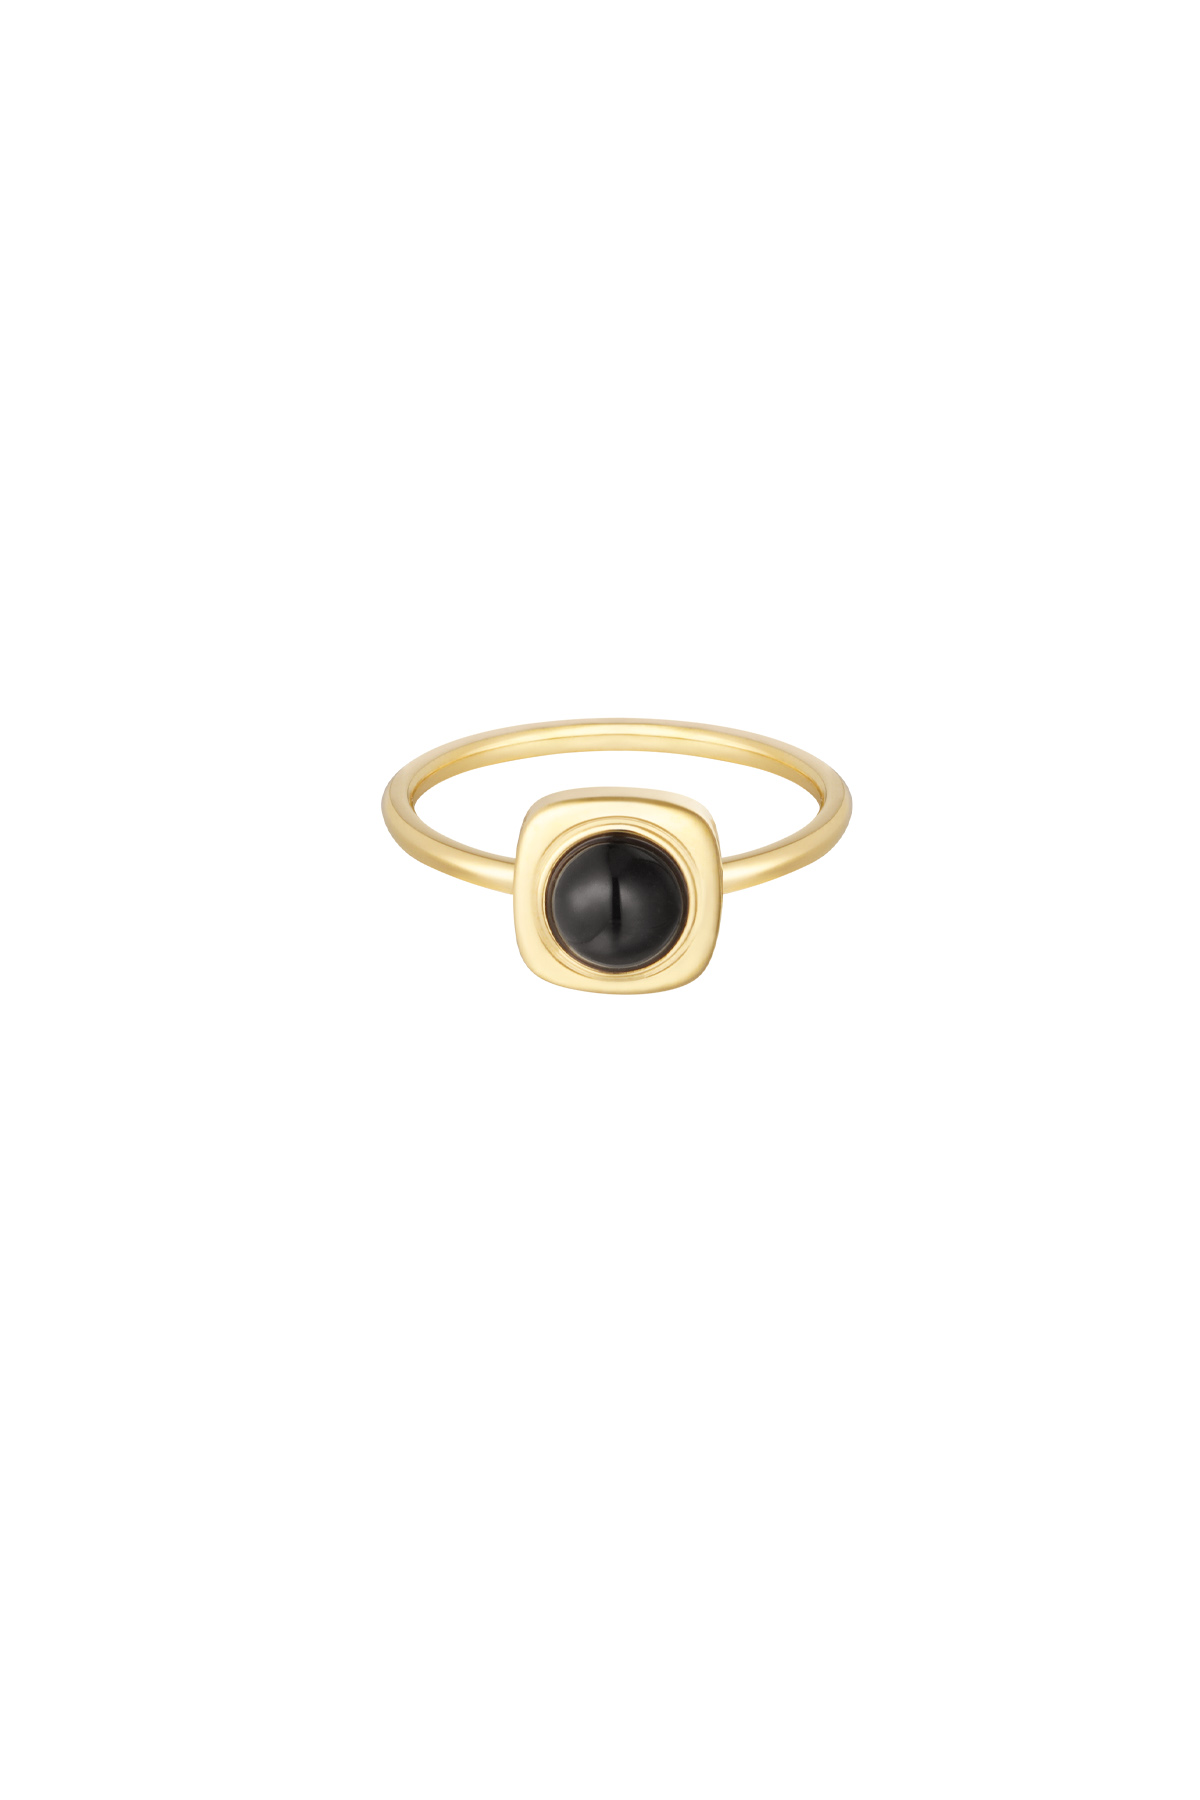 Ring colorful dot - gold/black h5 